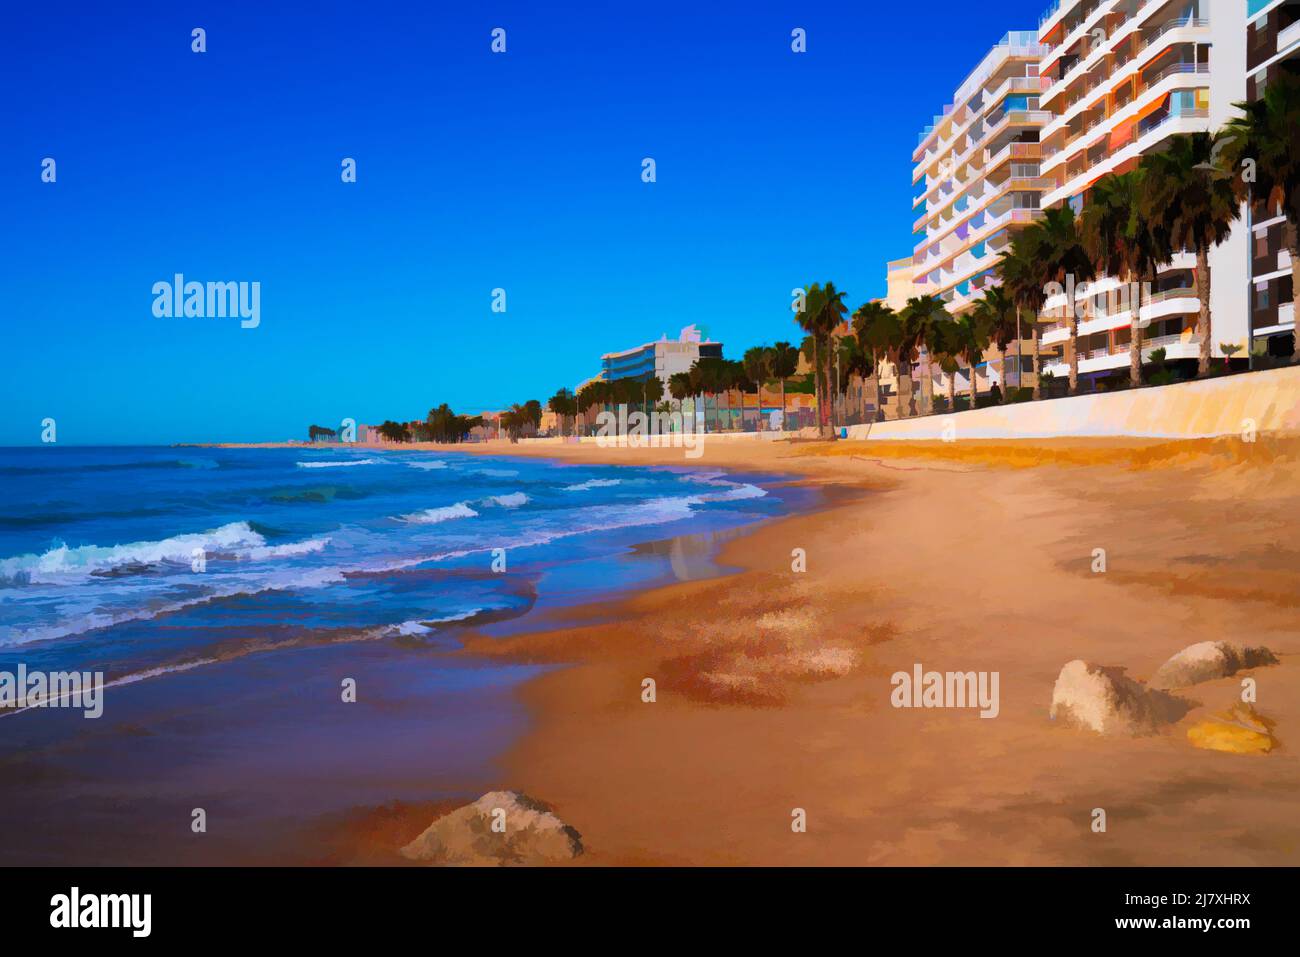 Villajoyosa beach Spain sand sea and palm trees illustration Costa Blanca Alicante Stock Photo